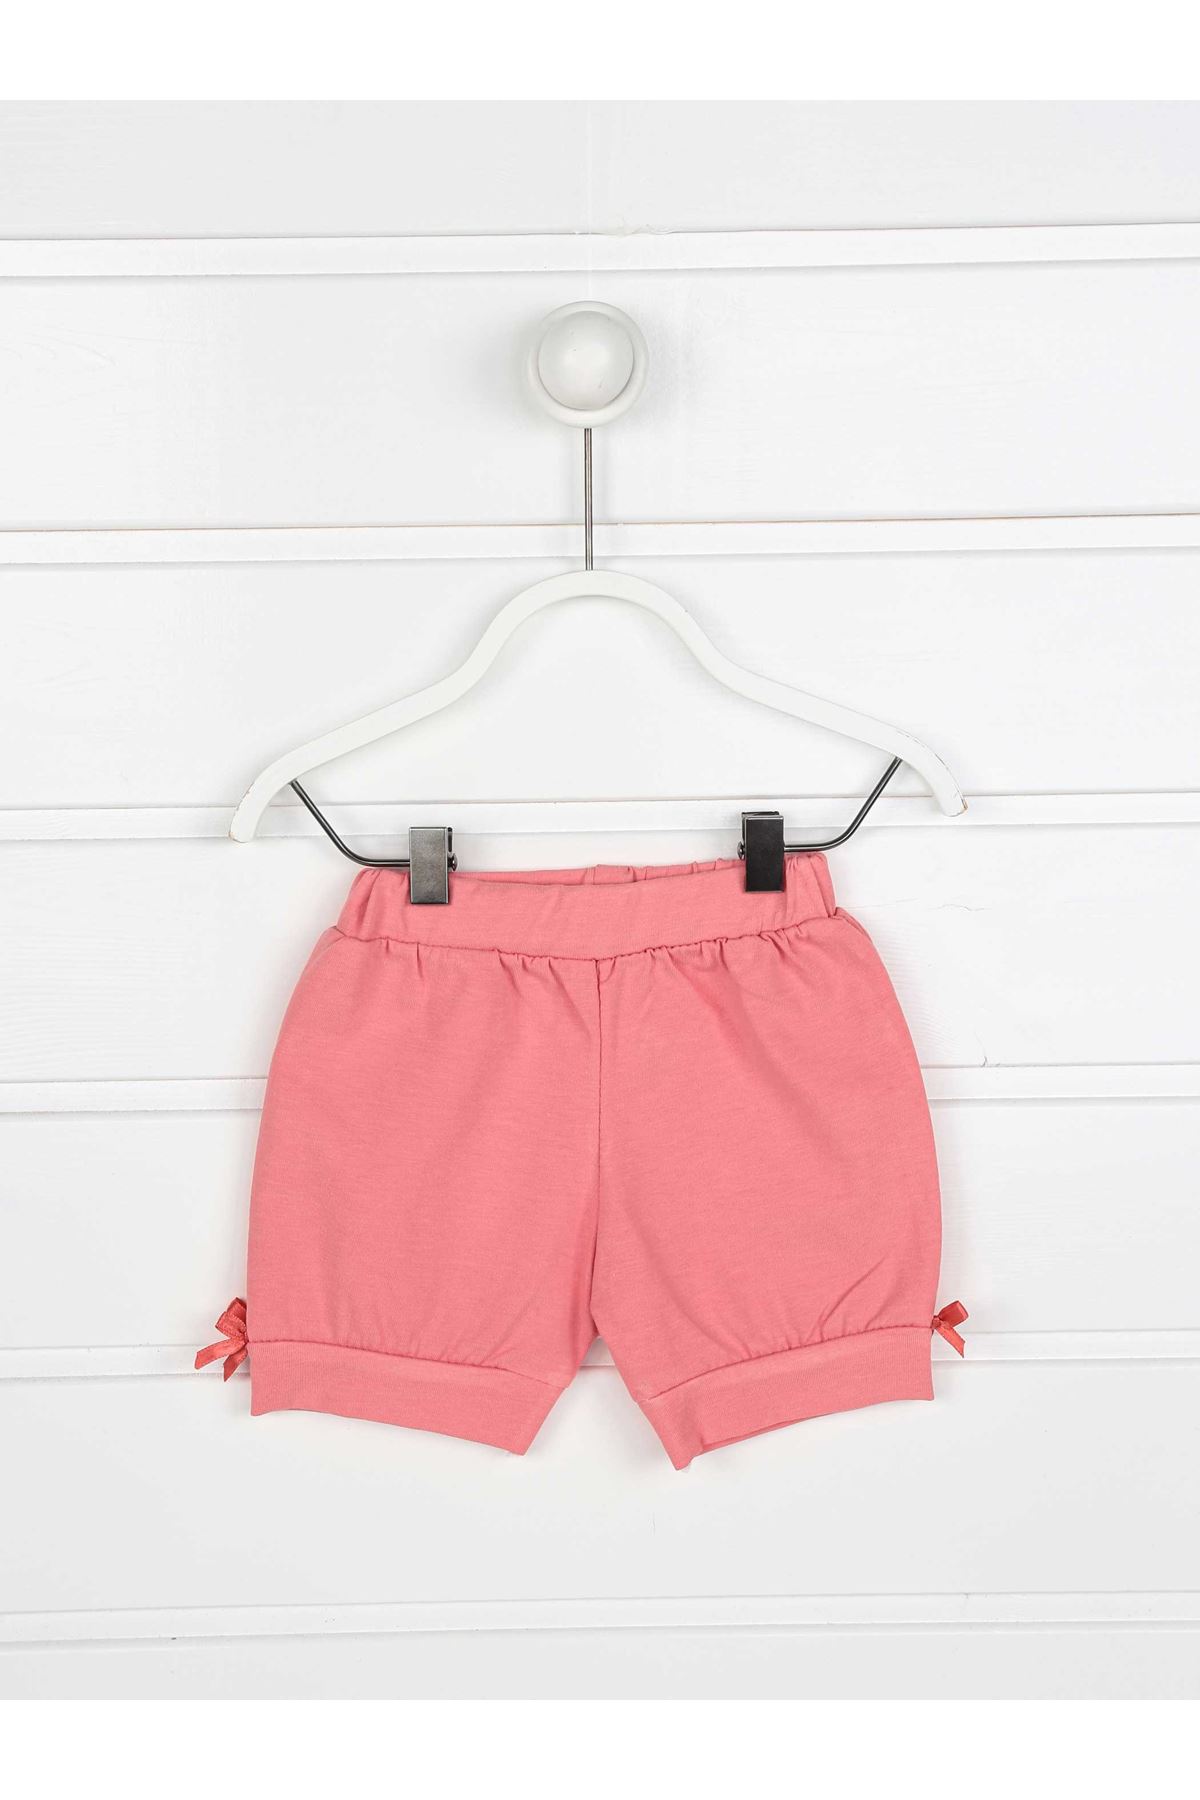 Summer baby girl bottom set short t-shirt 2 pieces bottom top babies cotton seasonal models